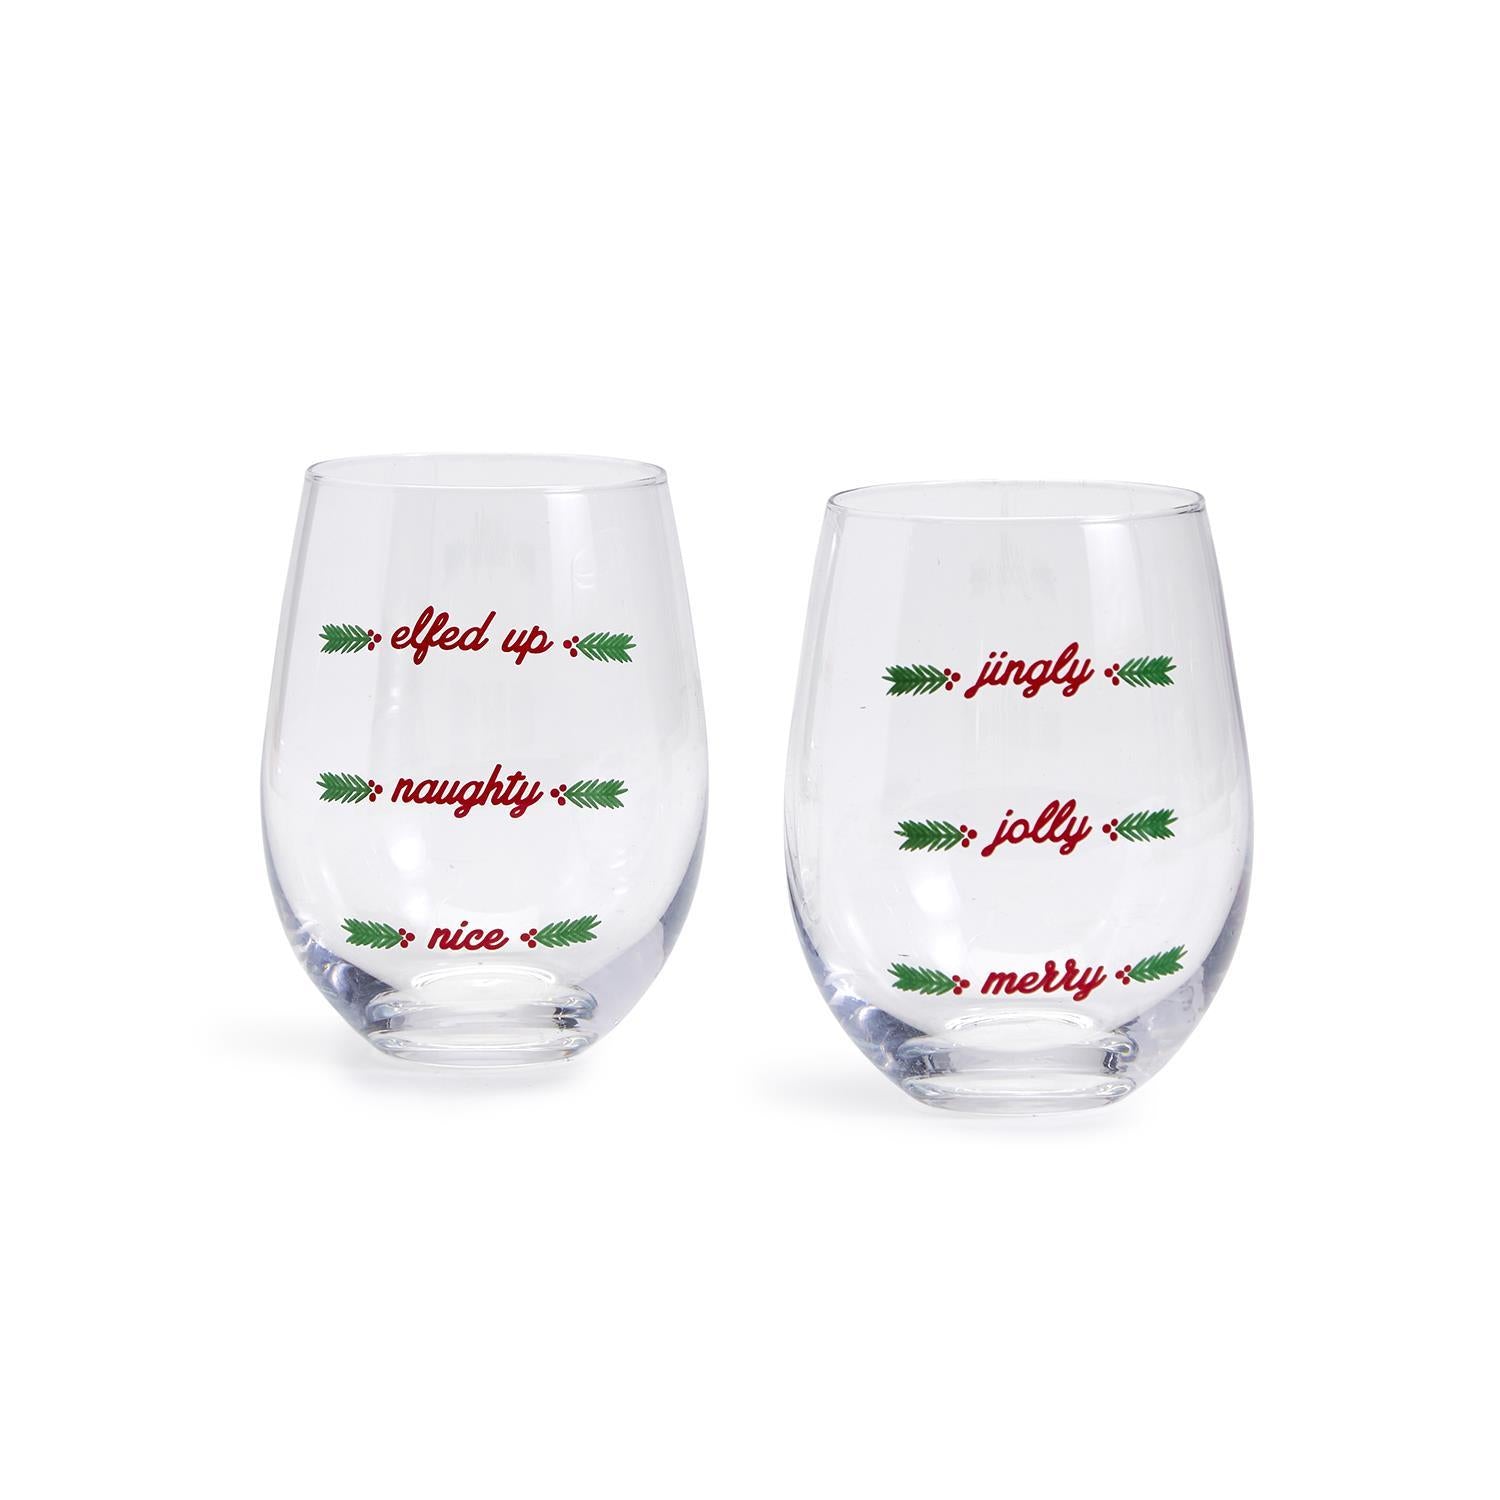 Merriest Stemless Wine Glass in 2 styles